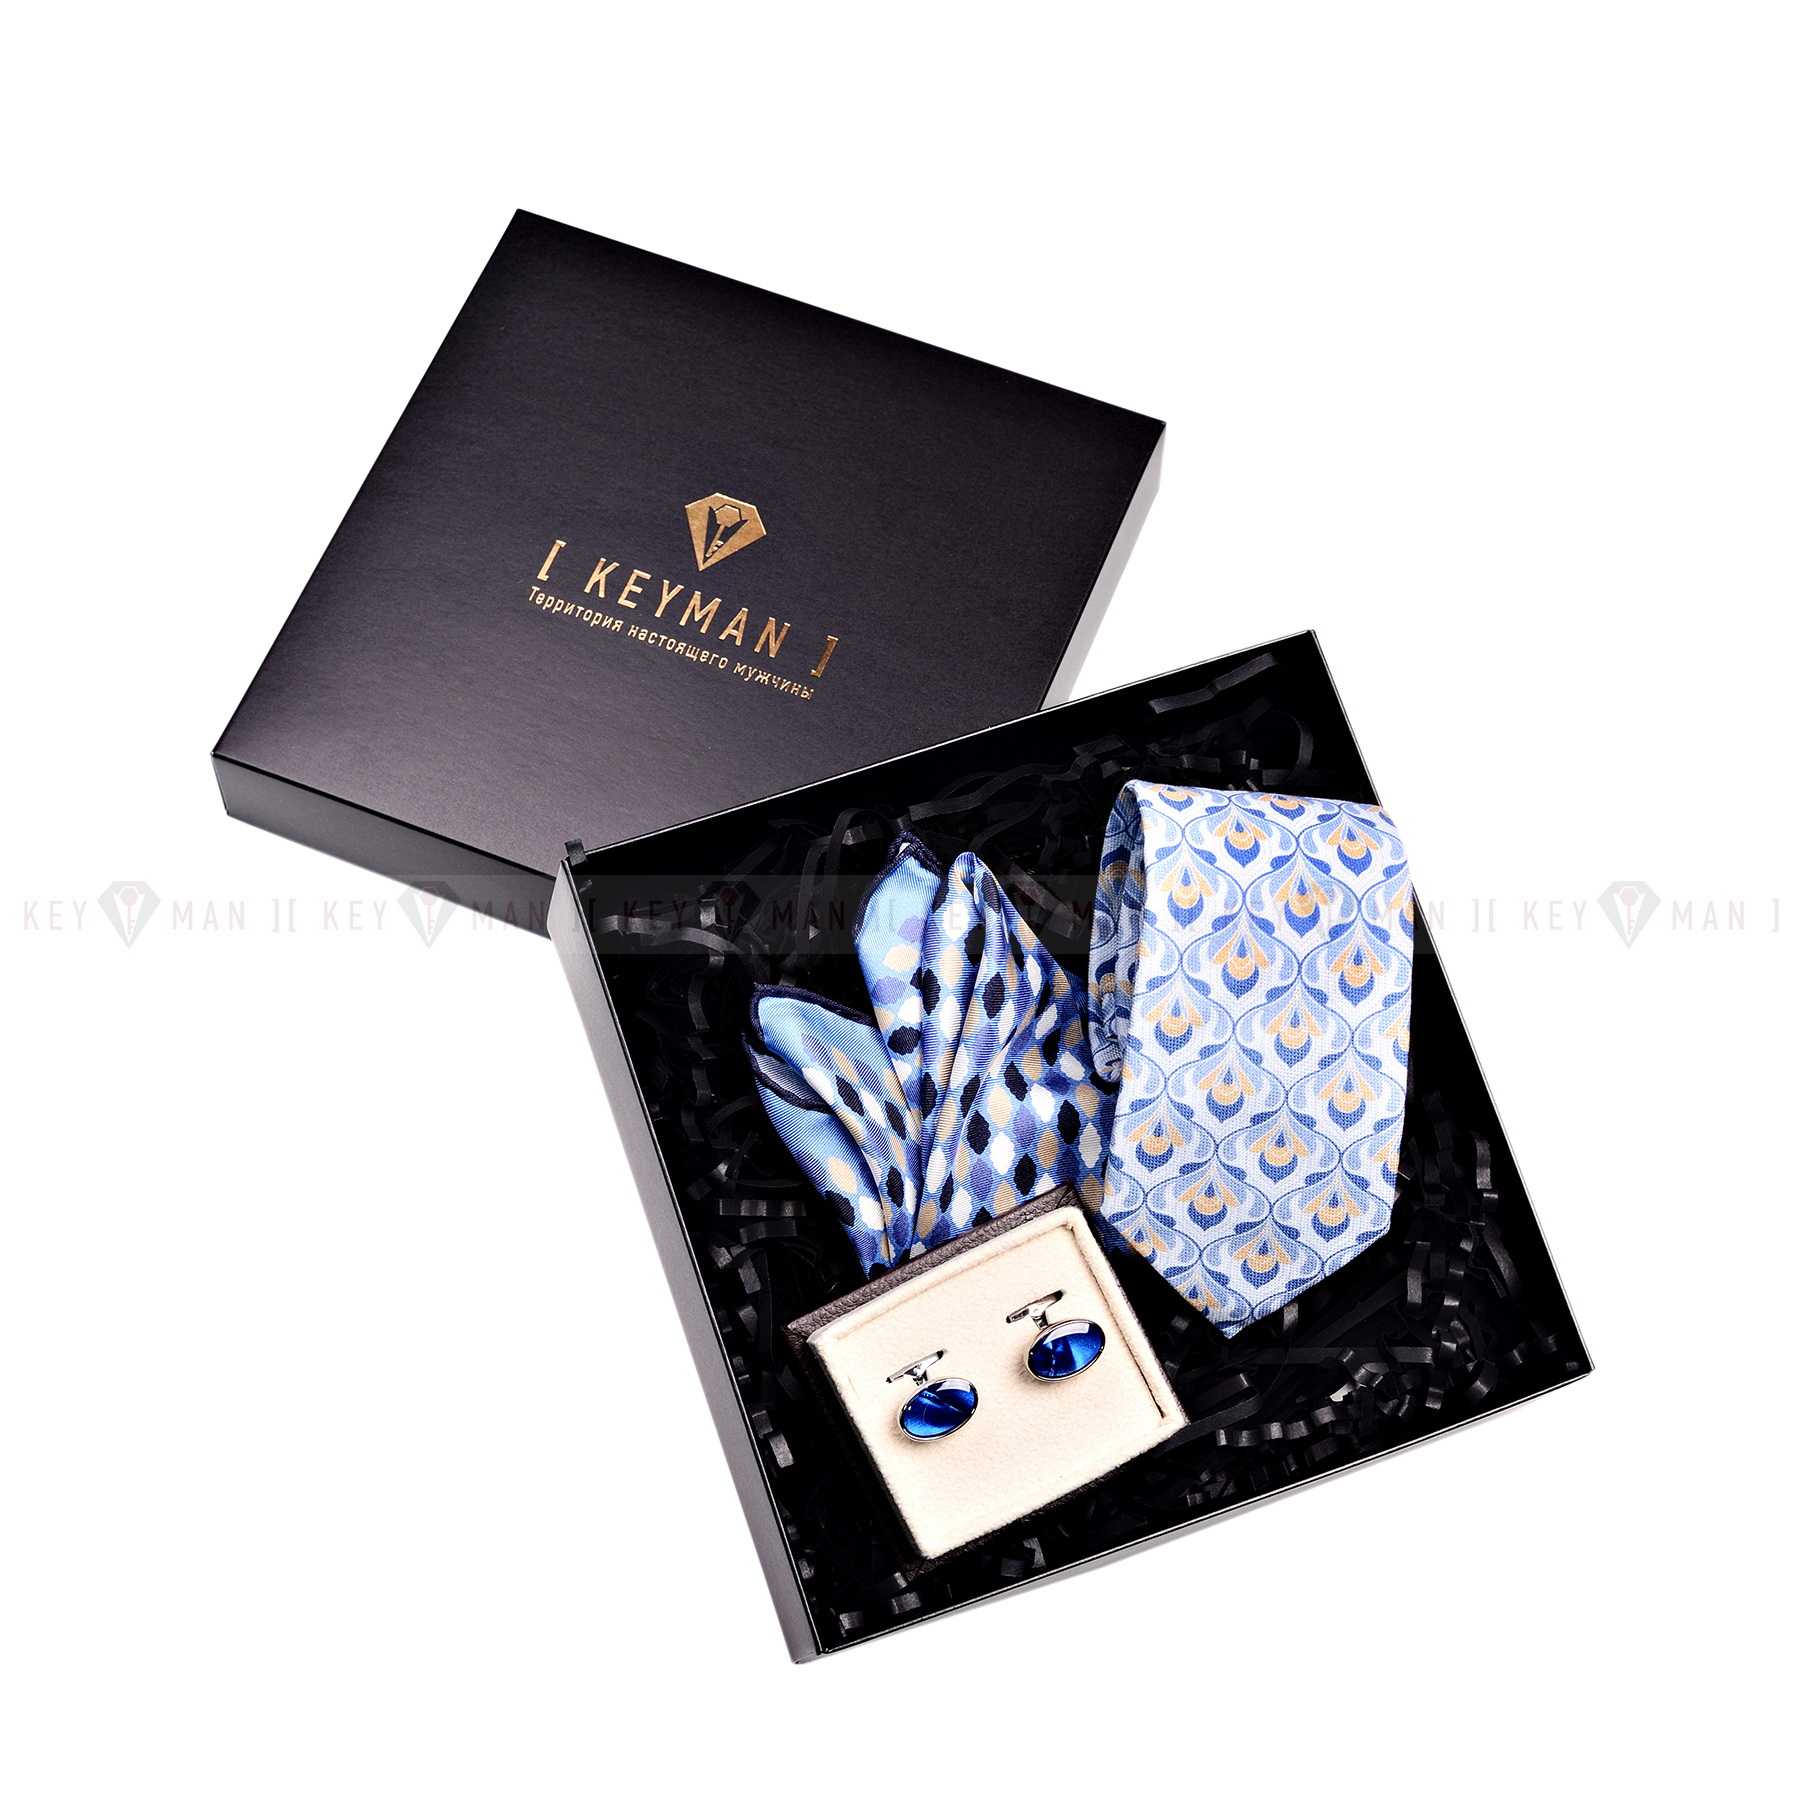 Пример подарочного набора Keyman (фирменная коробочка, галстук, платок, запонки)